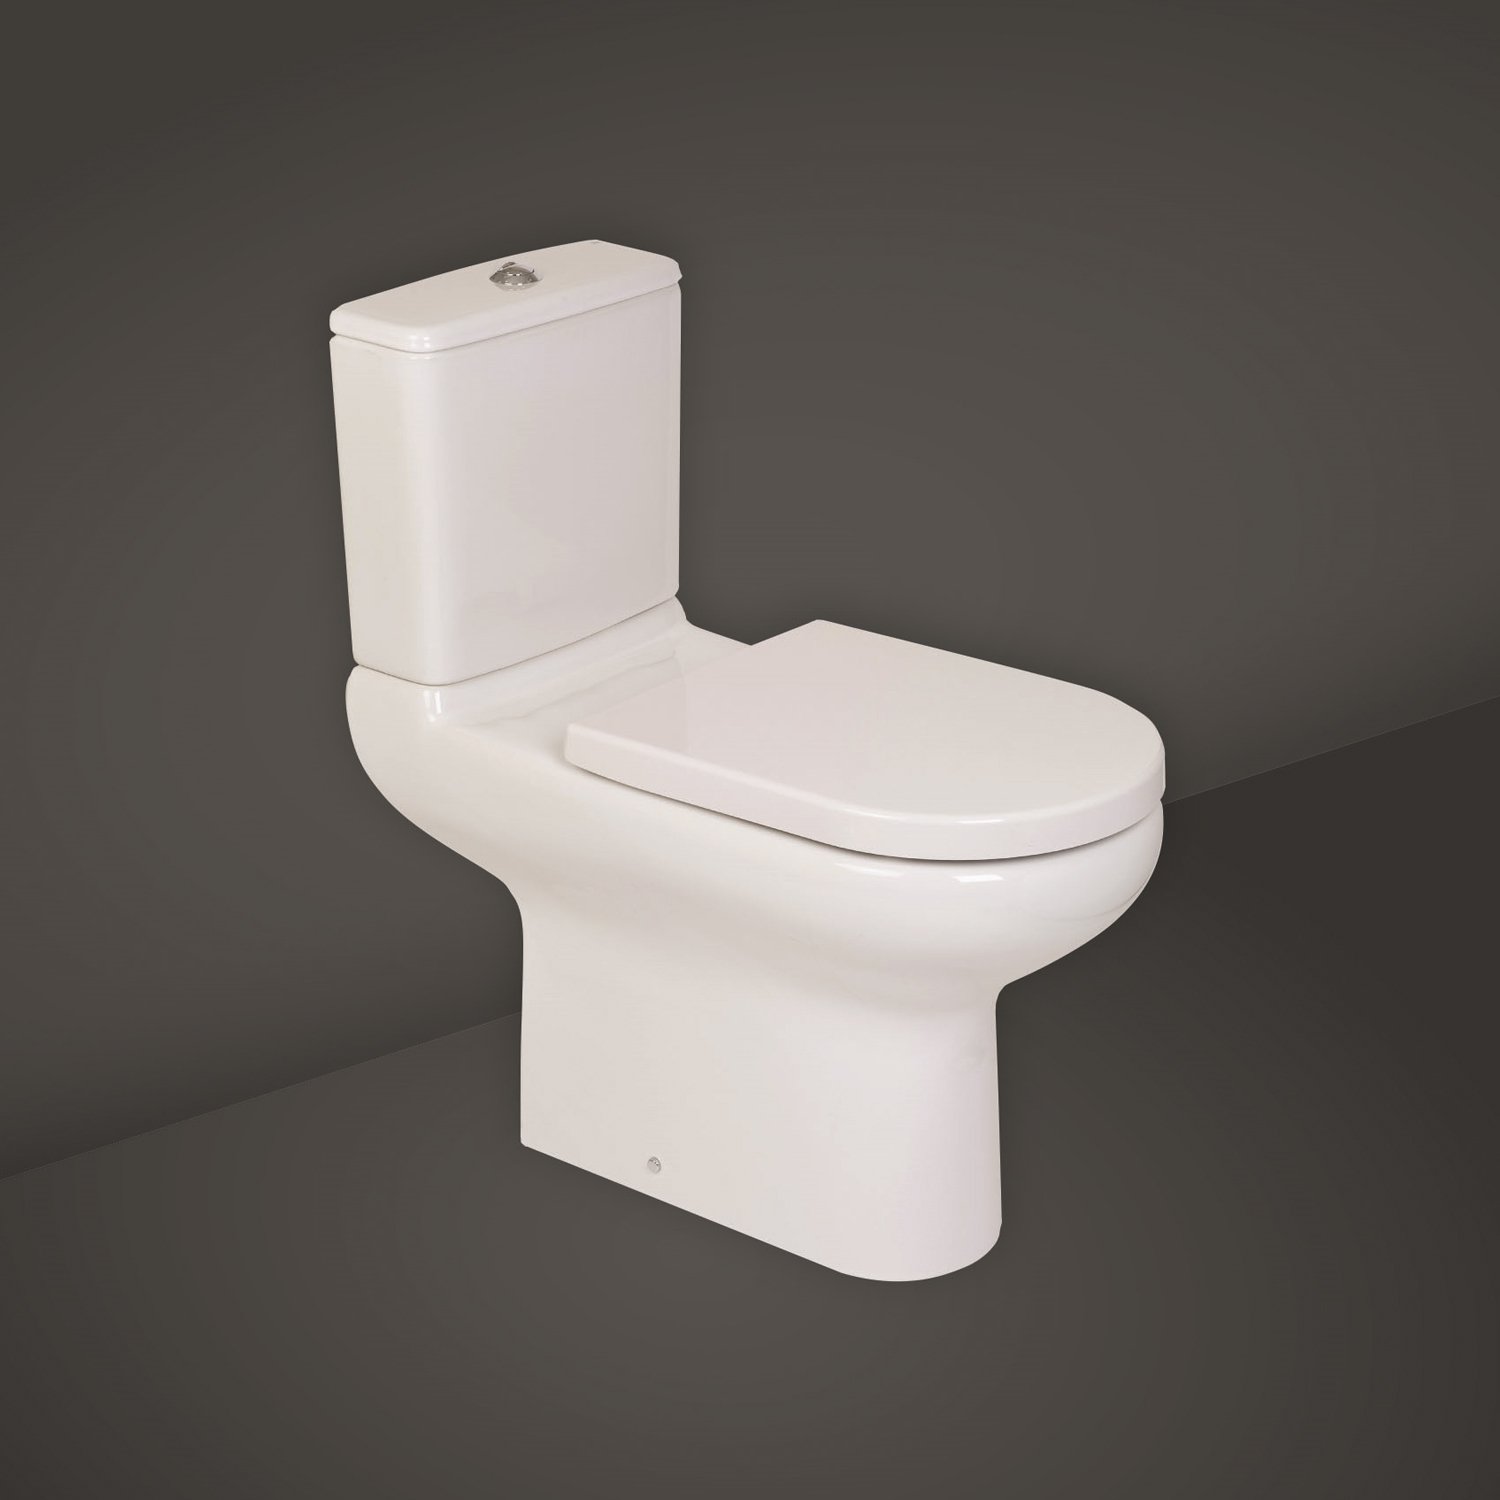 https://www.heatandplumb.com/images/products/o/rak-ceramics-compact-toilet-comslpak75ns.jpg